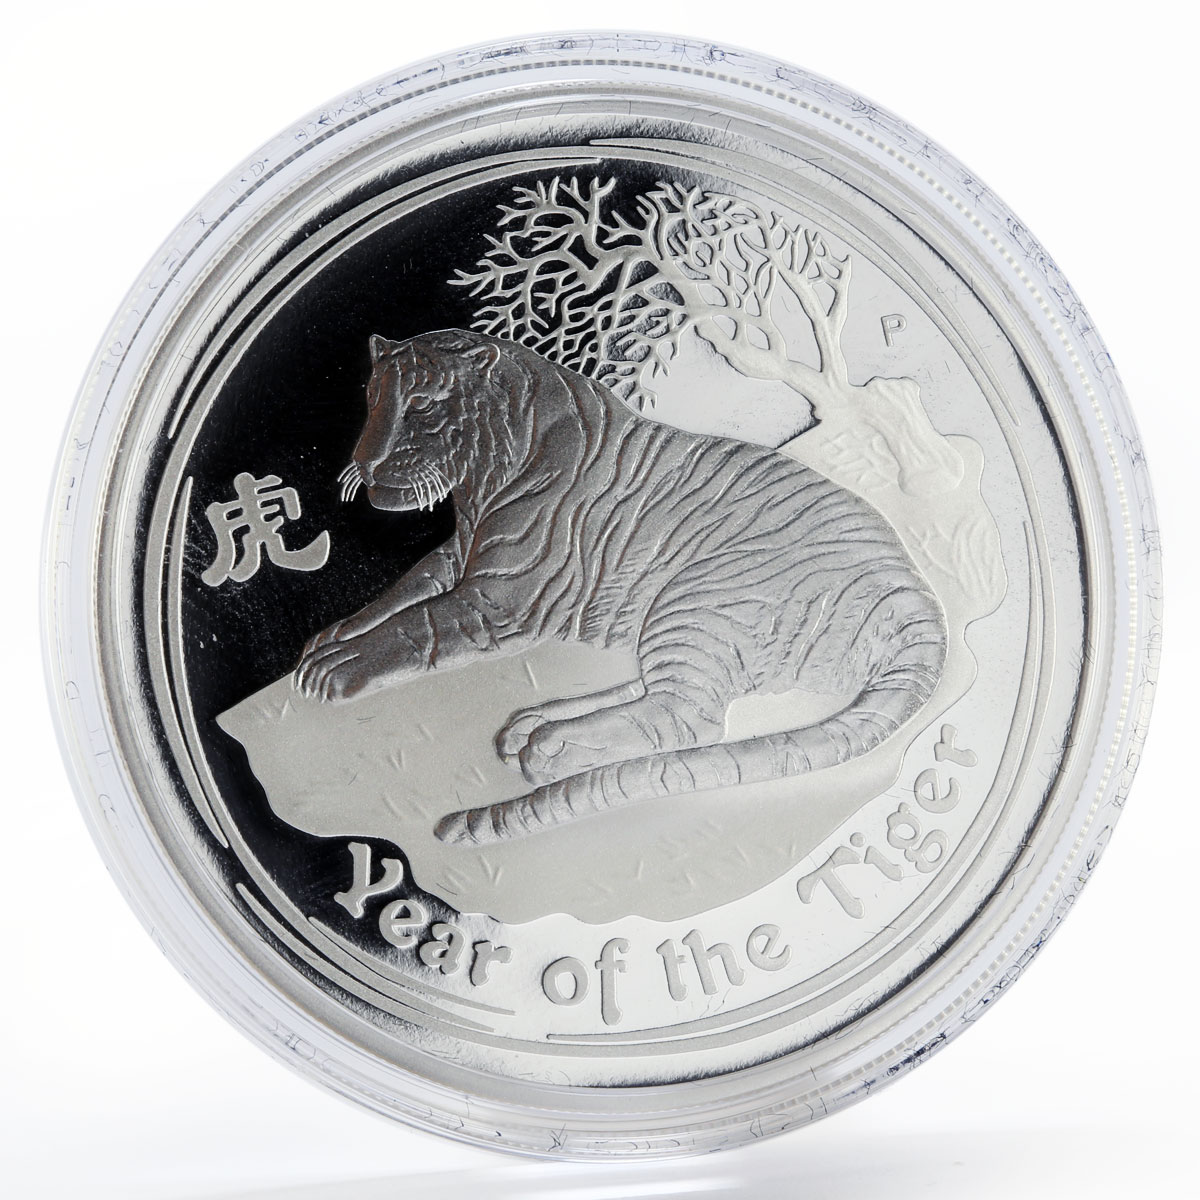 Australia 1 Dollar Year of the Tiger Lunar Series II silver coin 1 Oz 2010